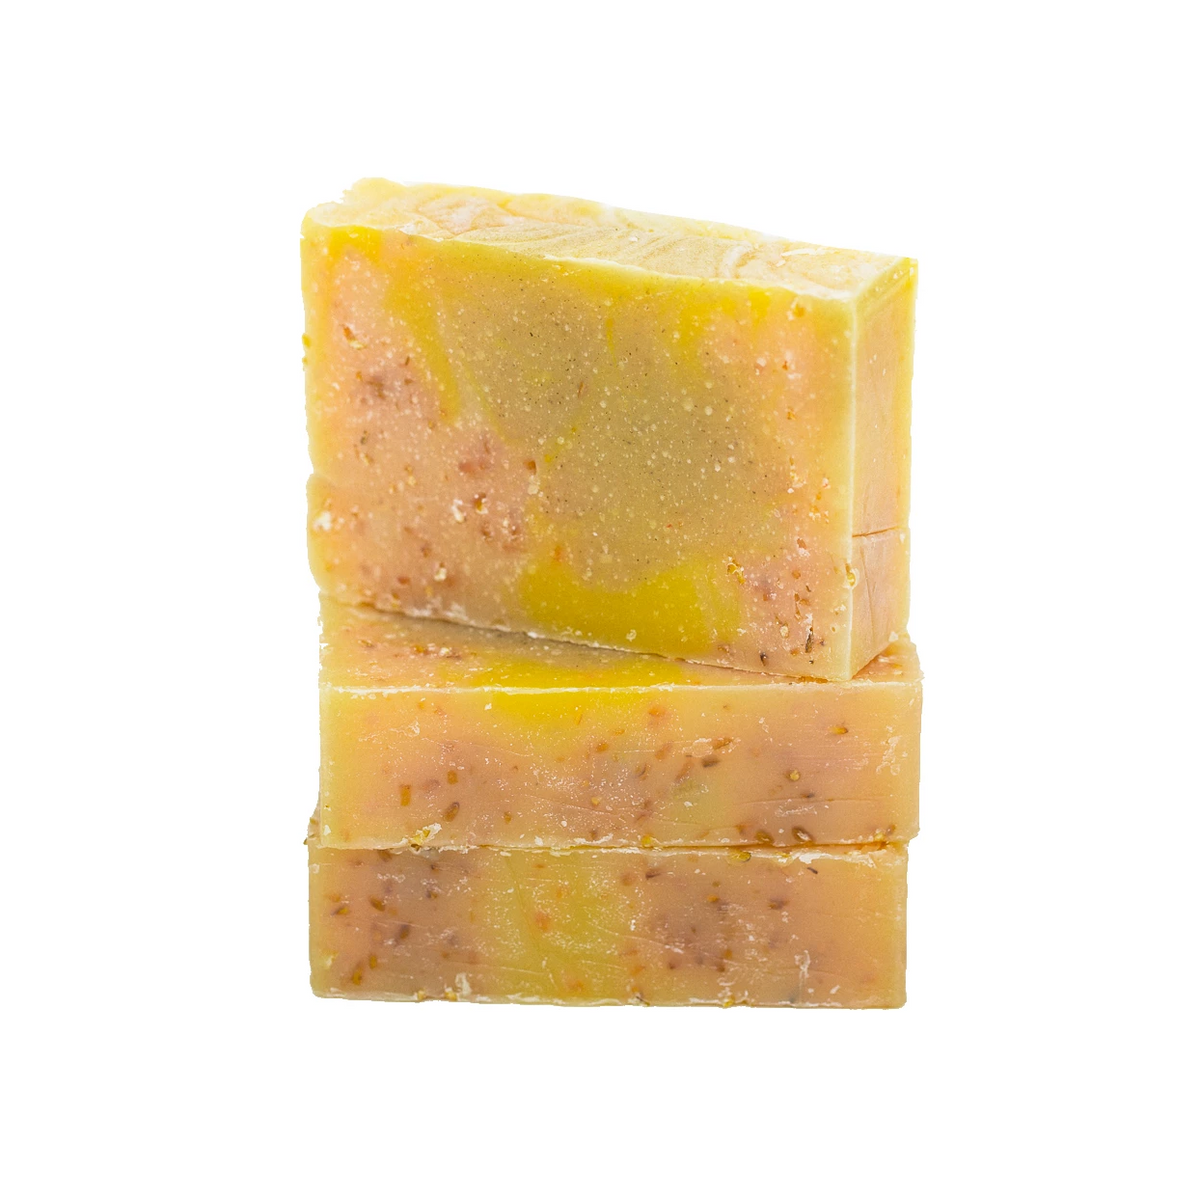 Mádara Organic Skincare - Isn't a simple soap bar one helluva hot